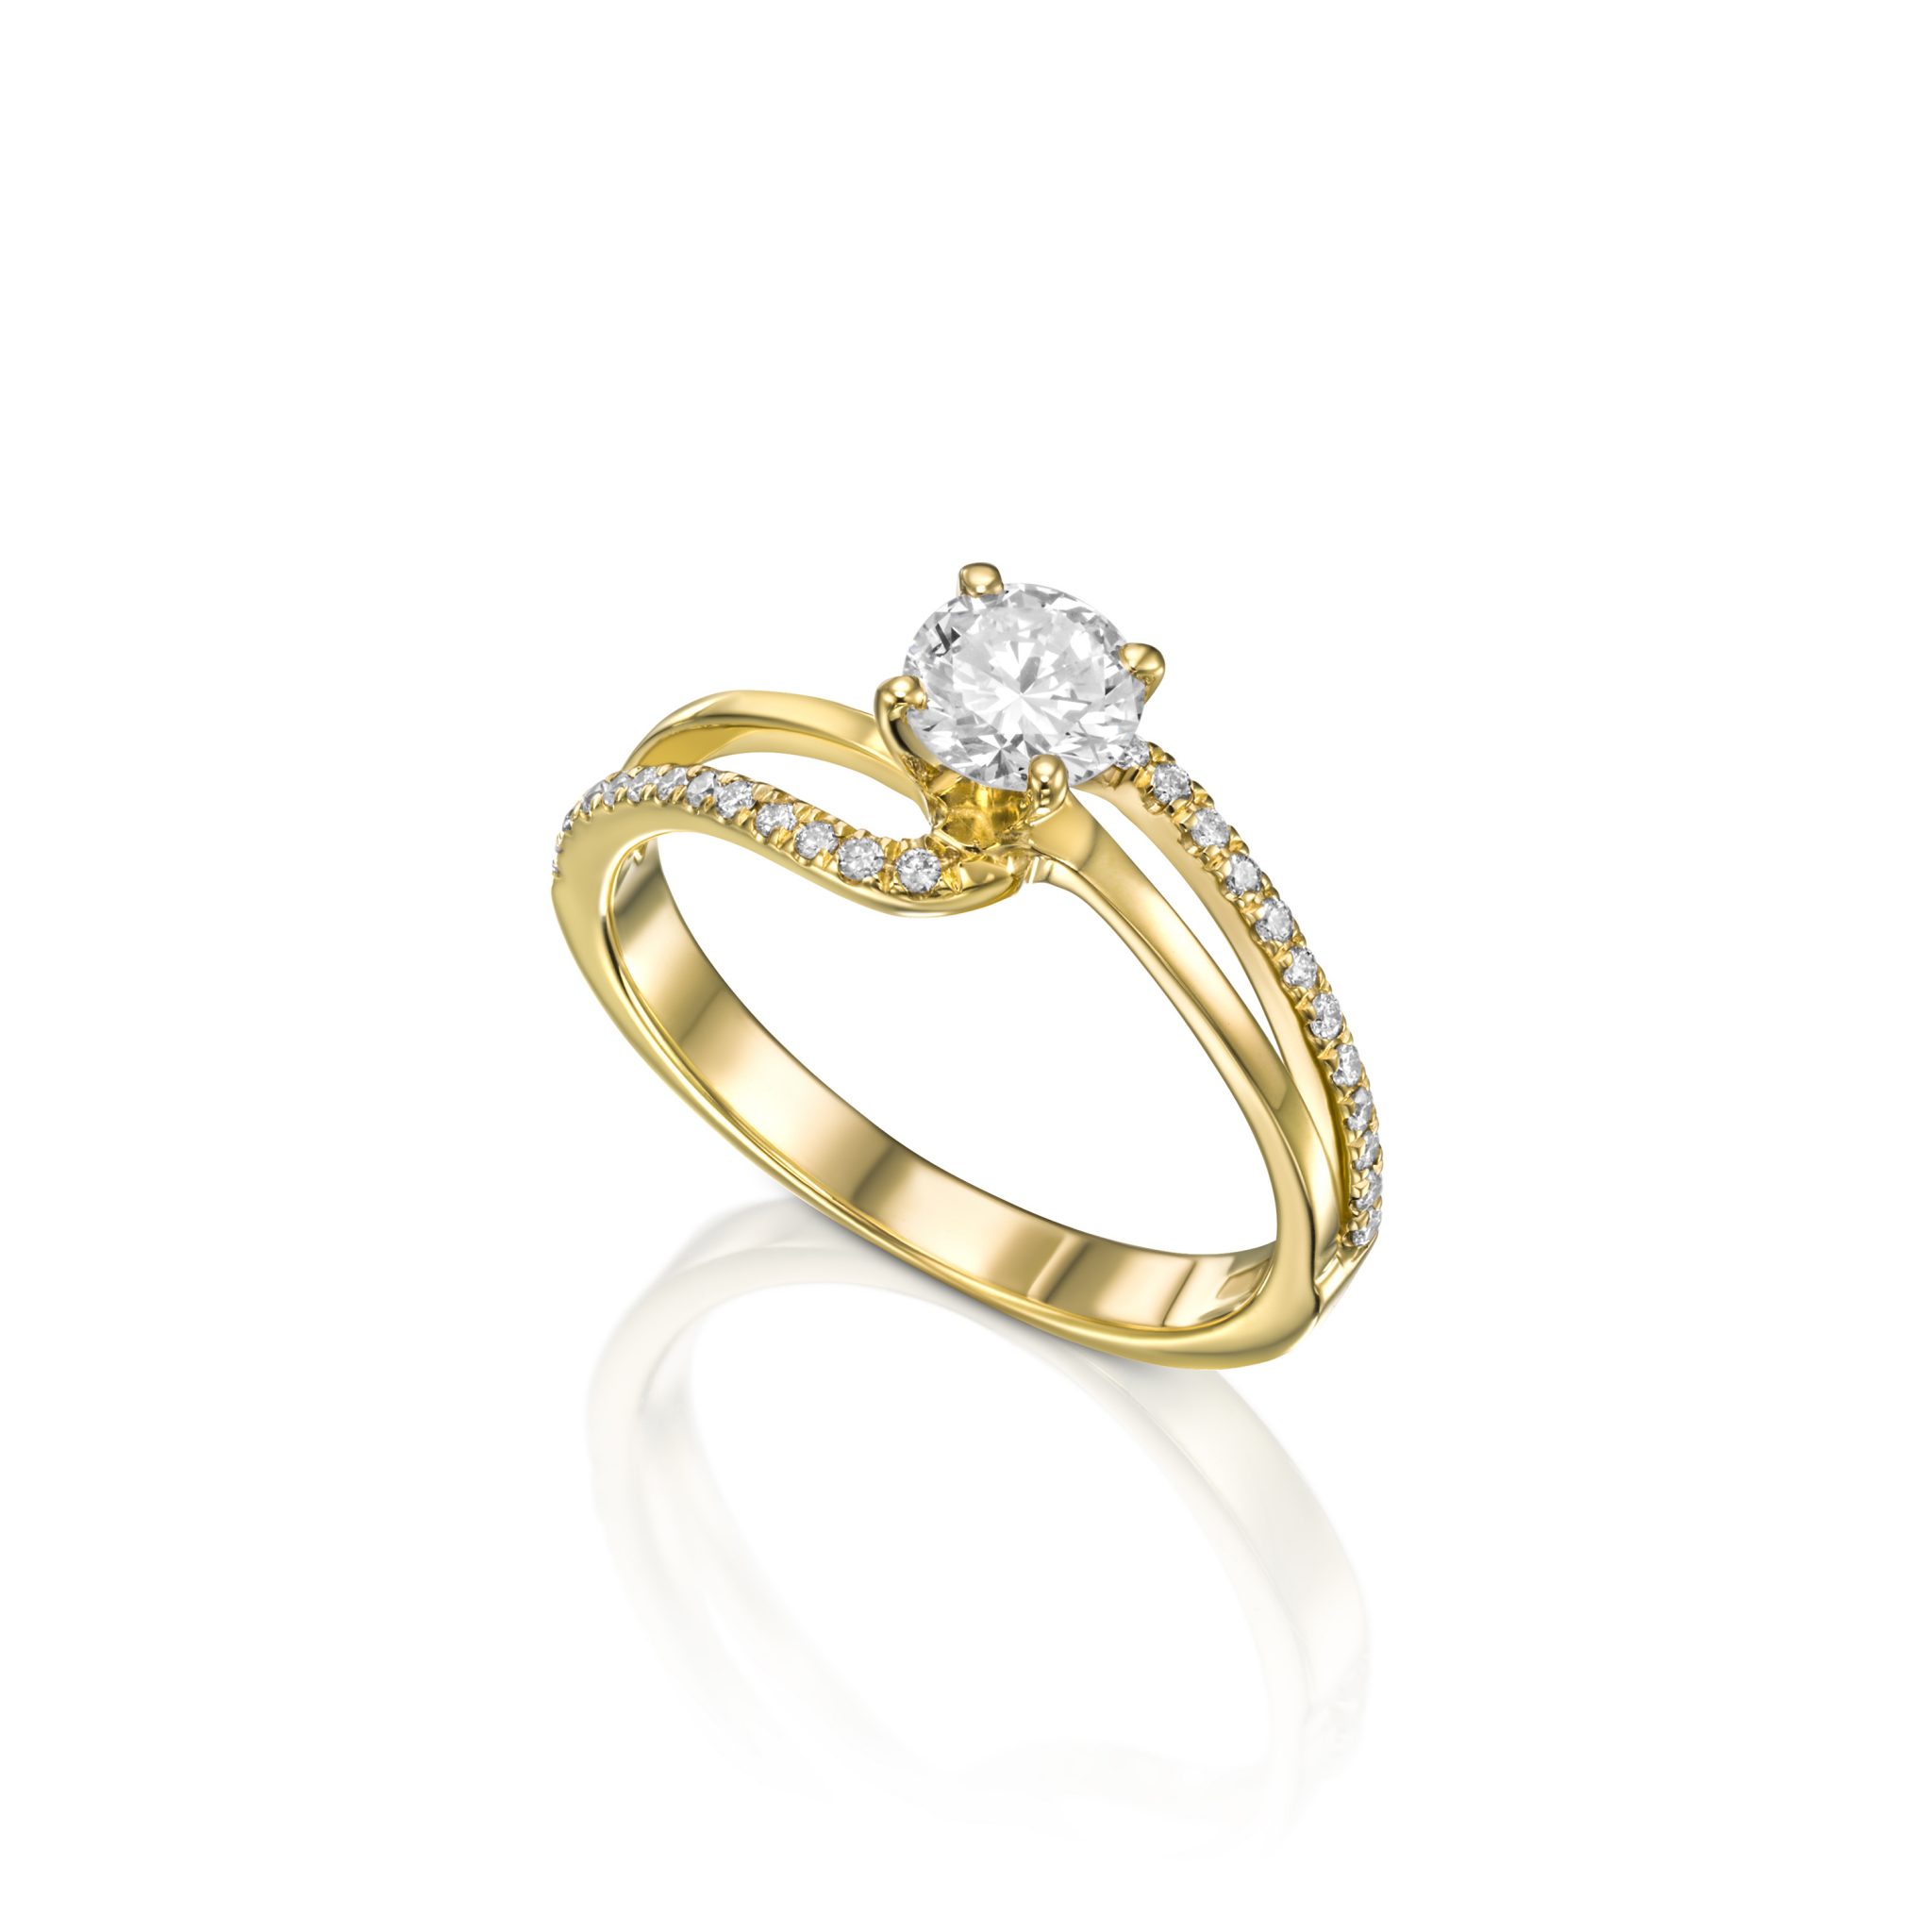 Geometry evidence prejudice טבעת אירוסין זהב צהוב - Amberjack Diamonds - טבעות אירוסין - טבעות יהלומים